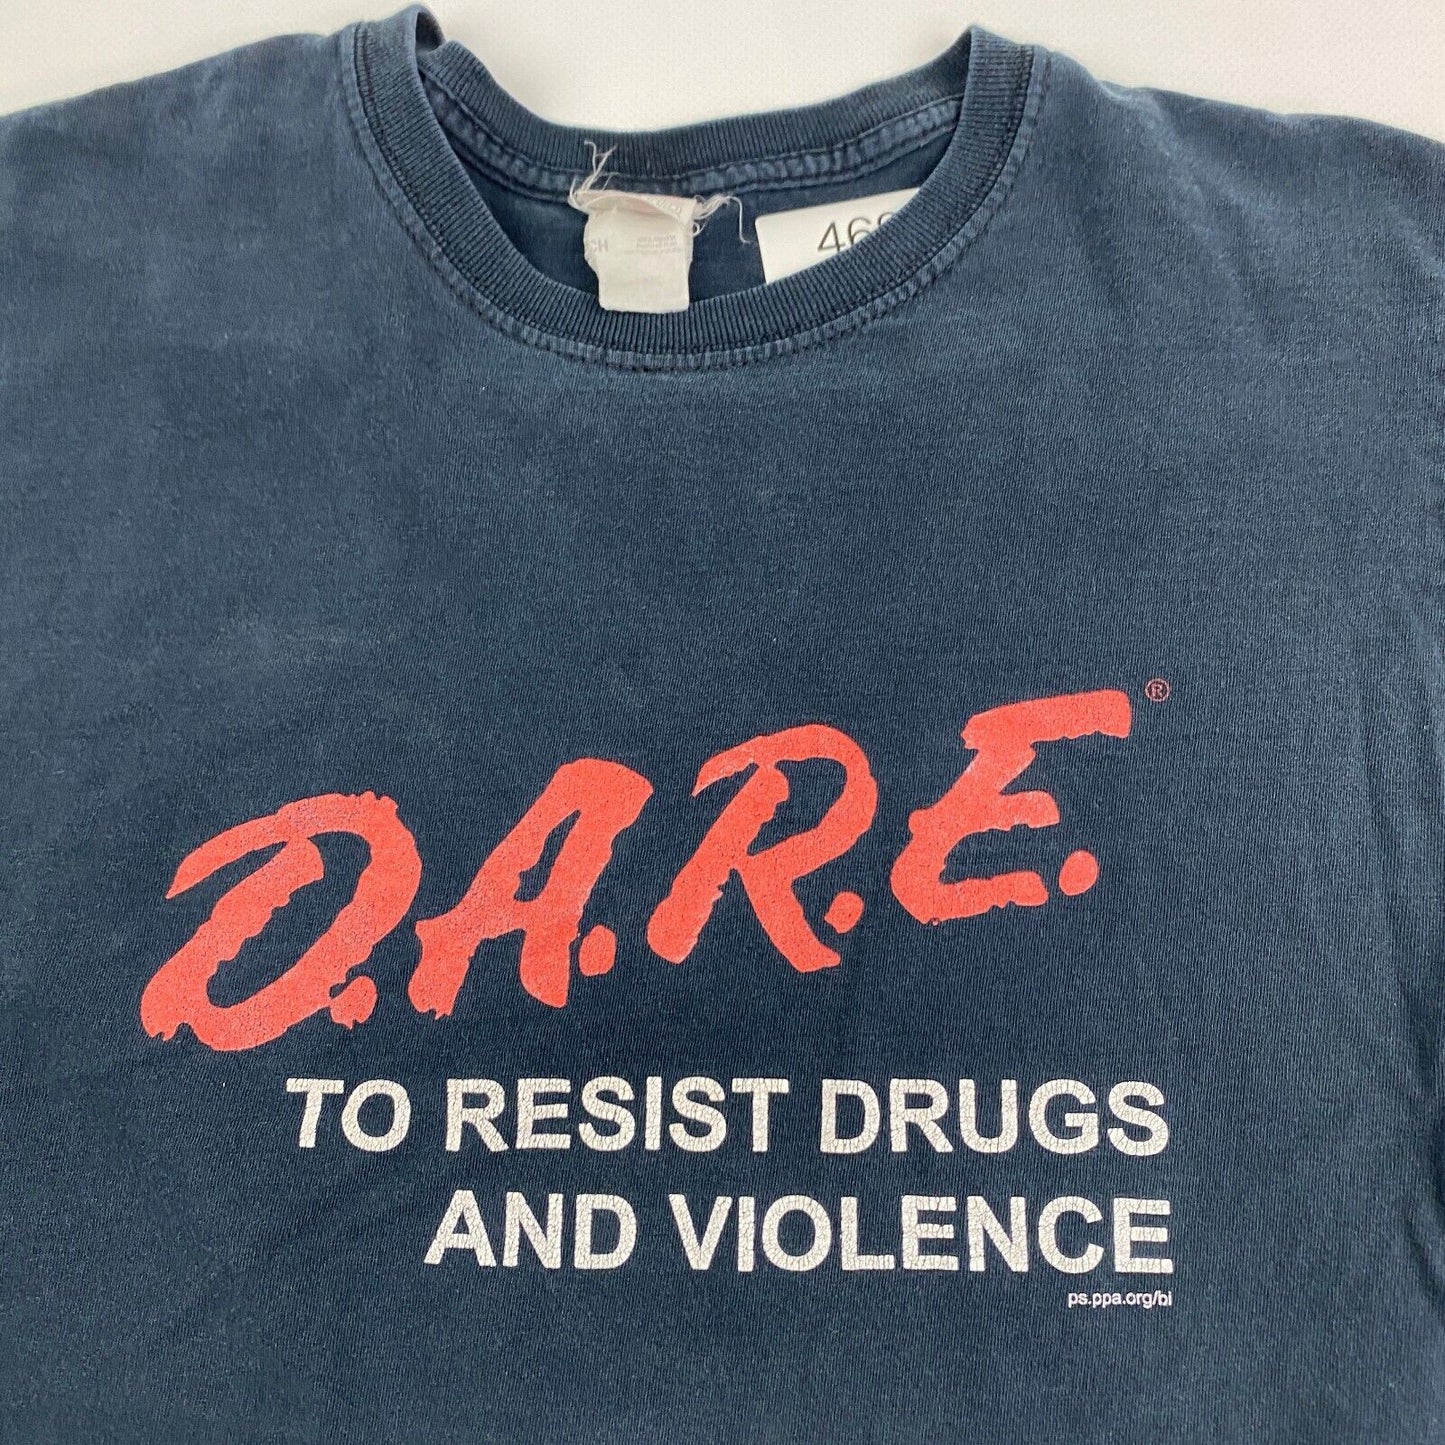 VINTAGE DARE To Resist Drugs & Violence Black T-Shirt sz Small Men